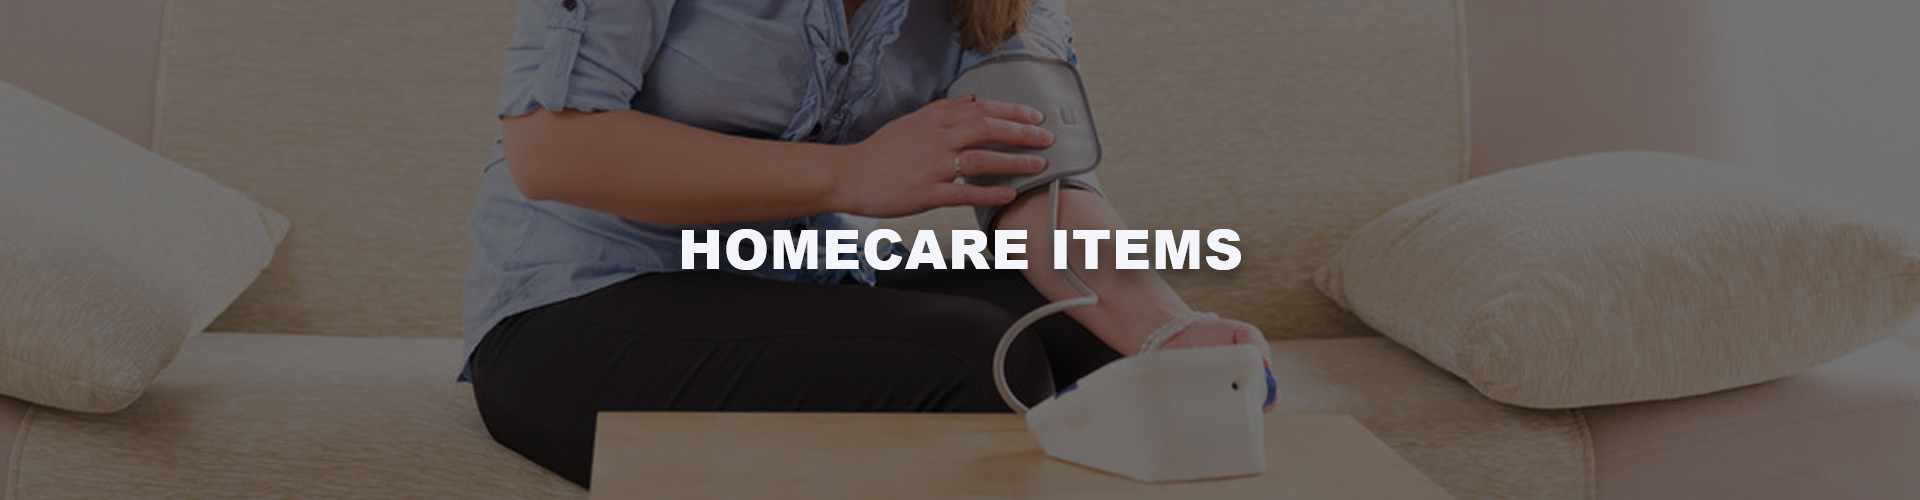 Homecare Items